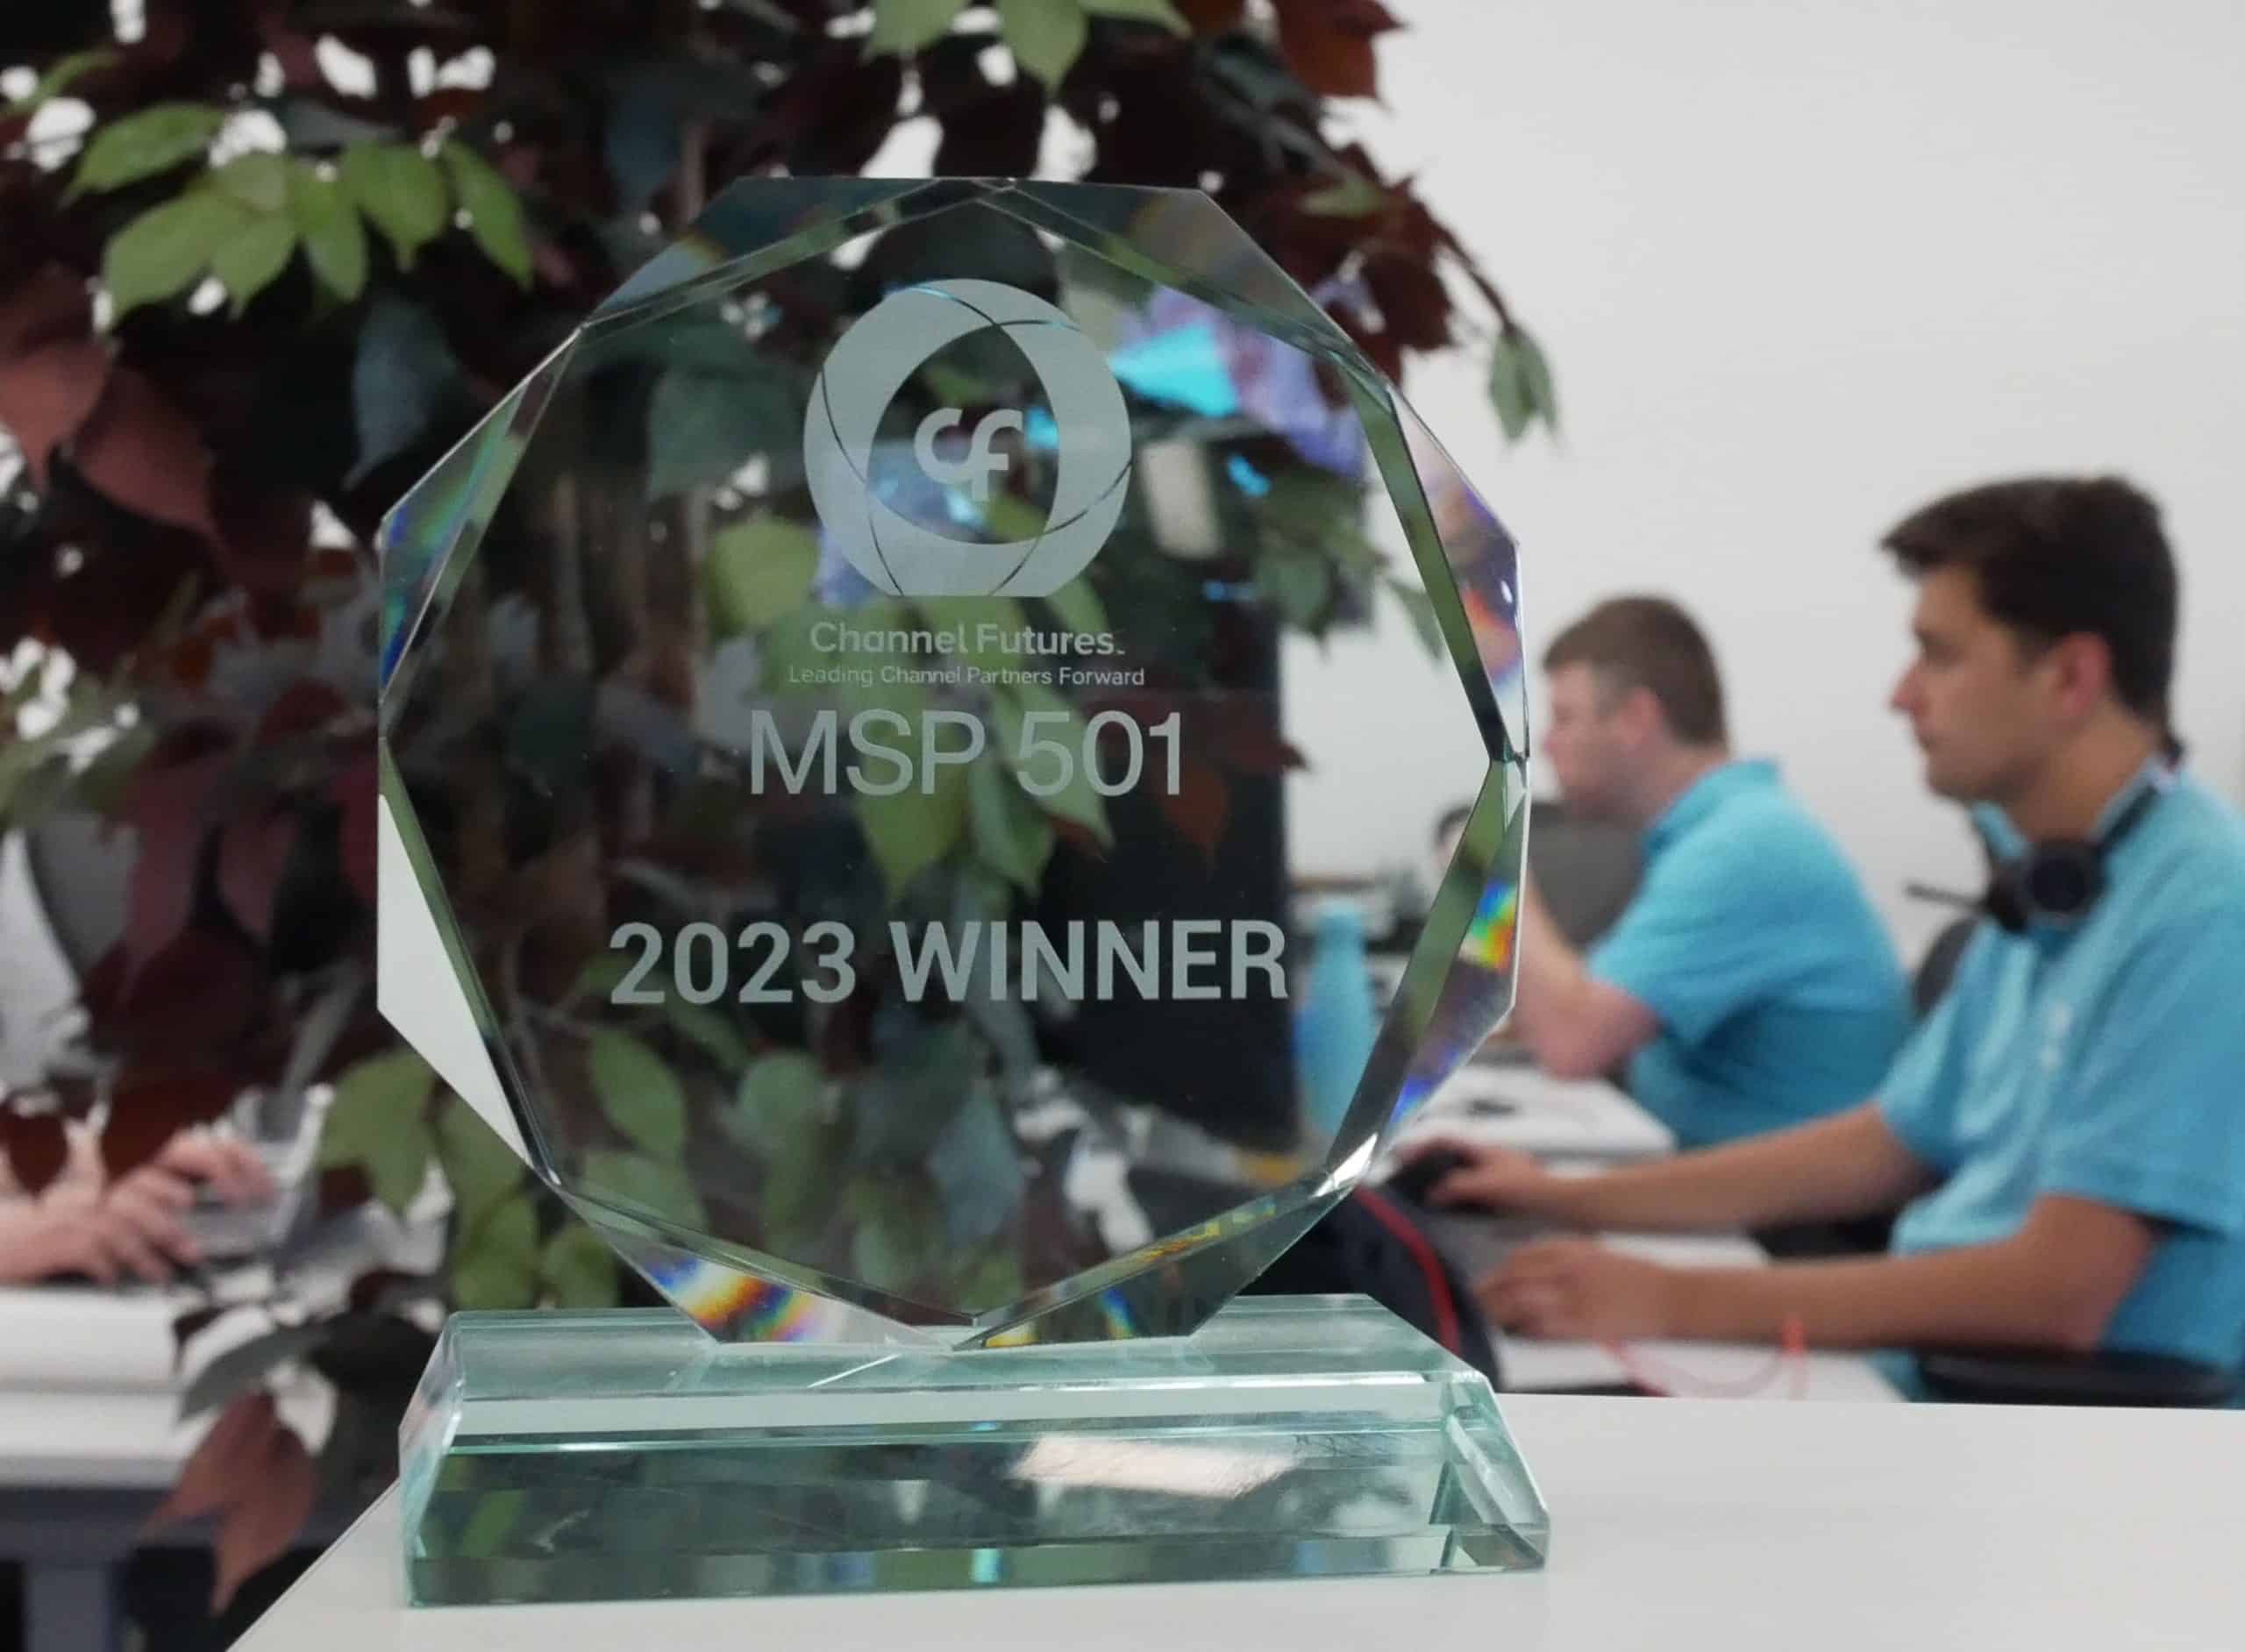 MSP 501 trophy